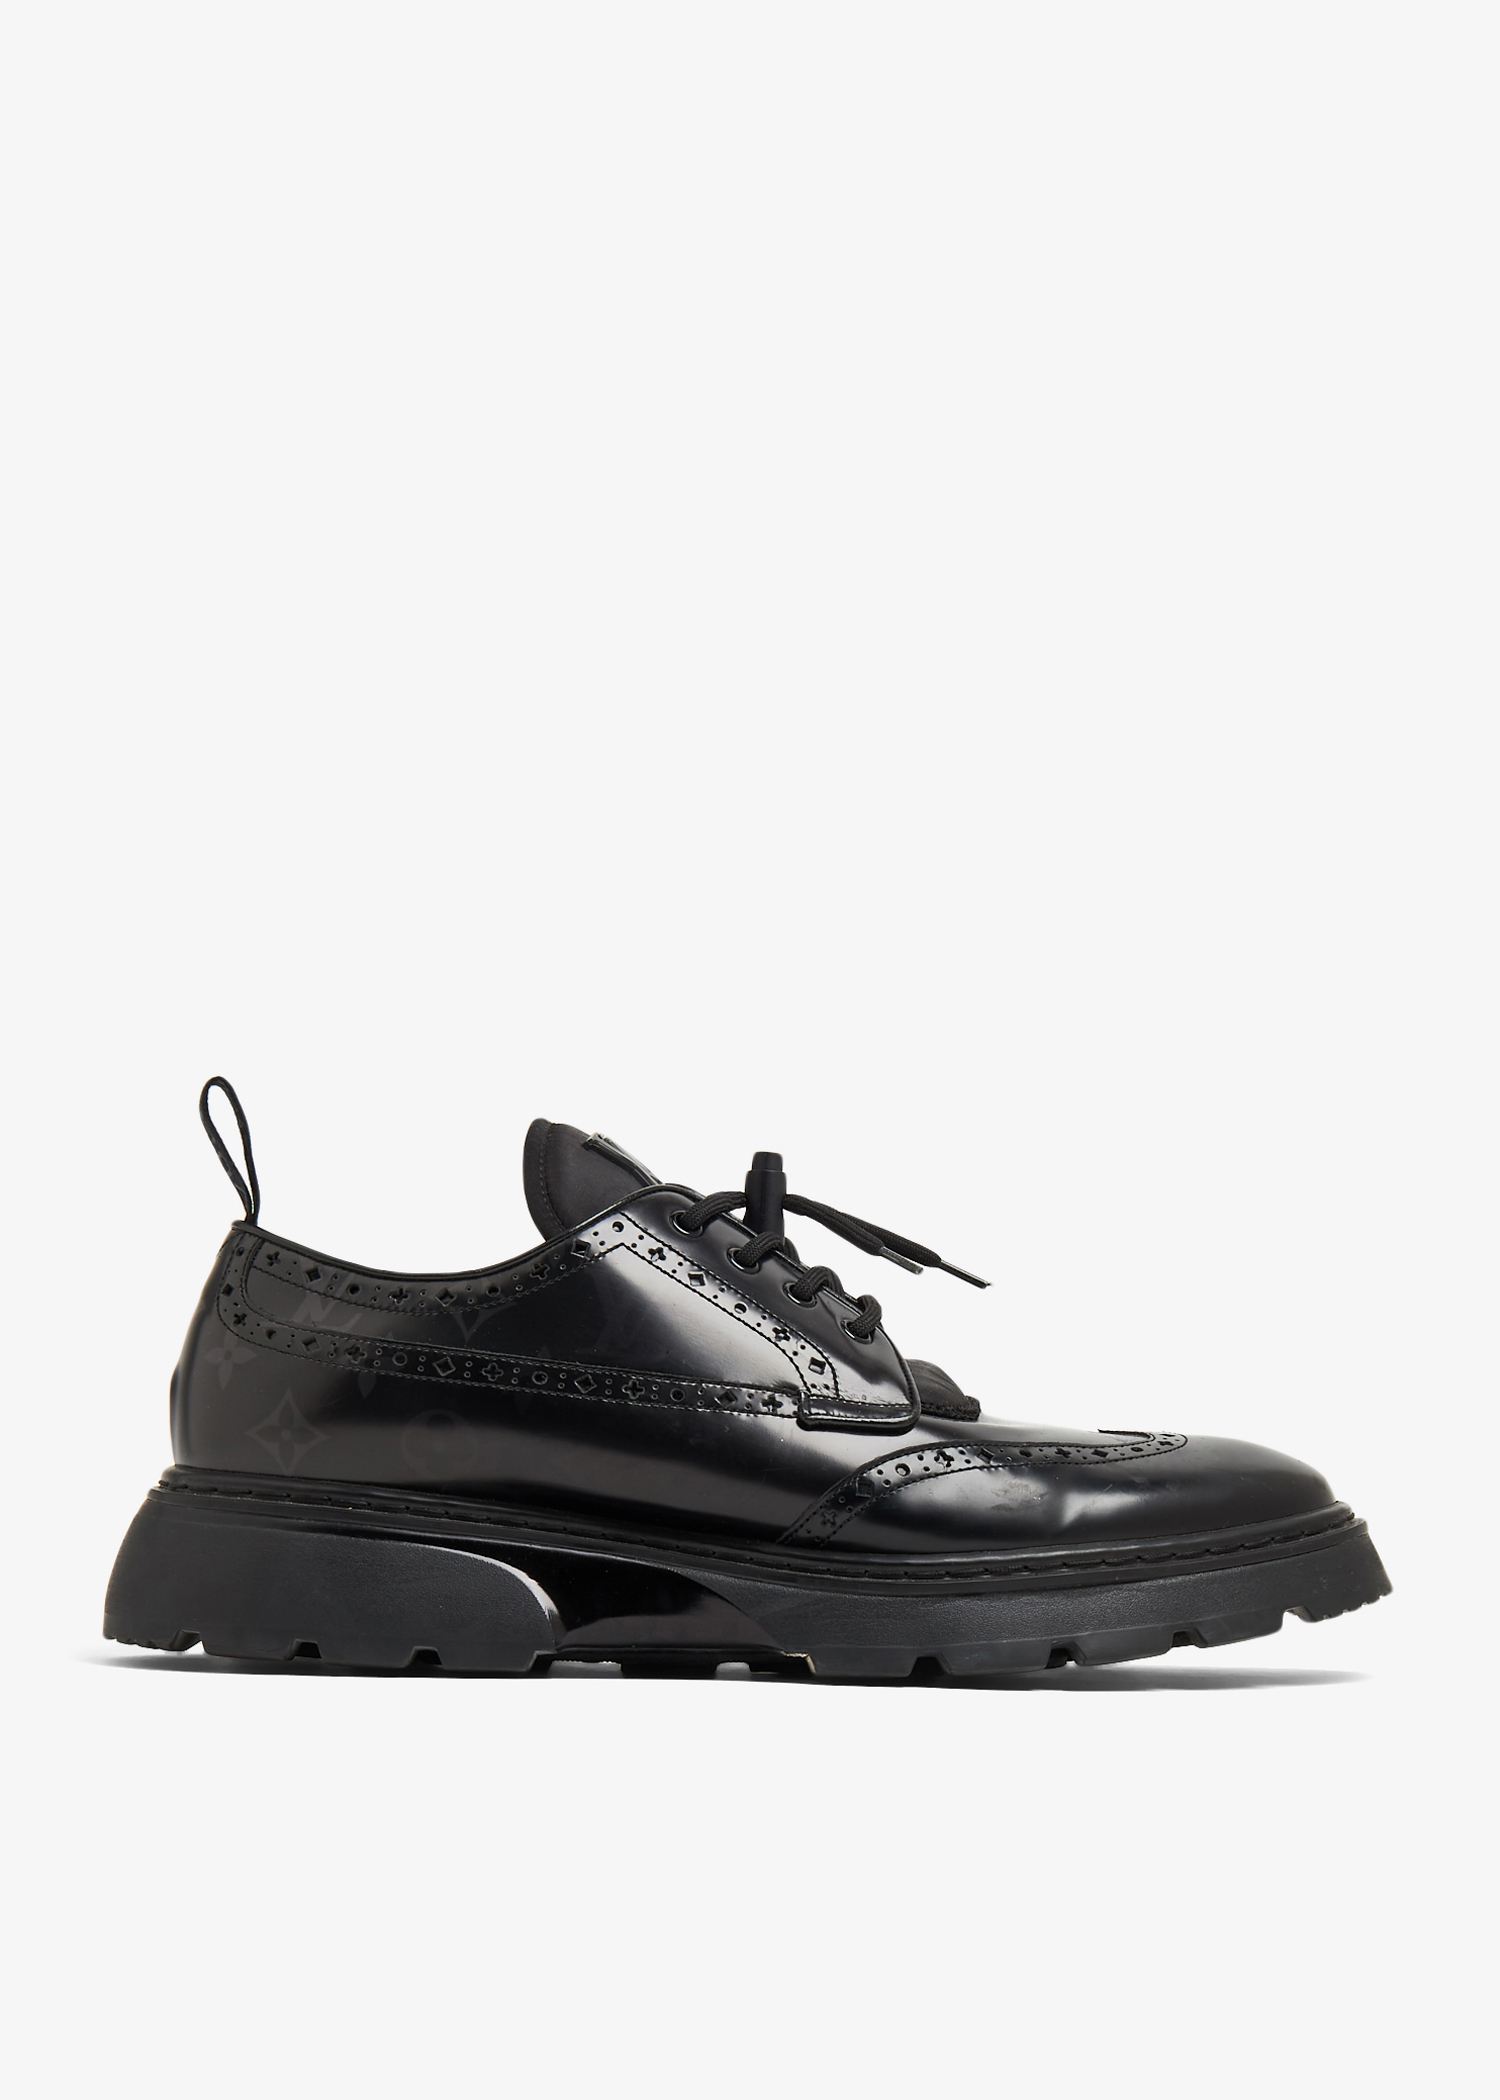 Louis Vuitton Pre-Loved LV Minister derby shoes for Men - Black in KSA